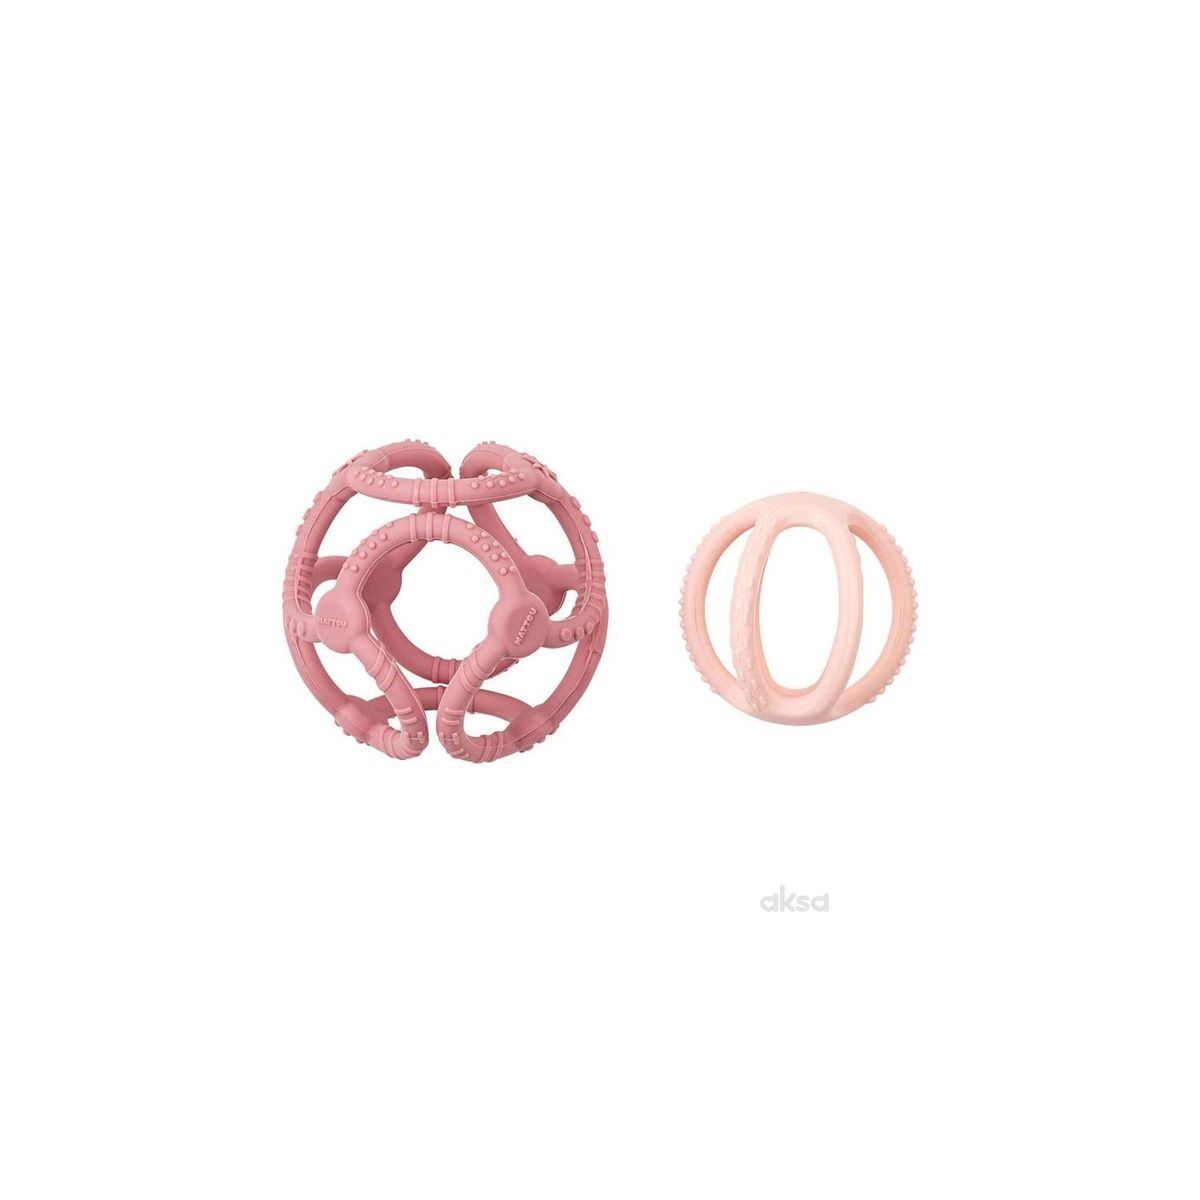 Nattou zvečka u obliku kruga, roze 